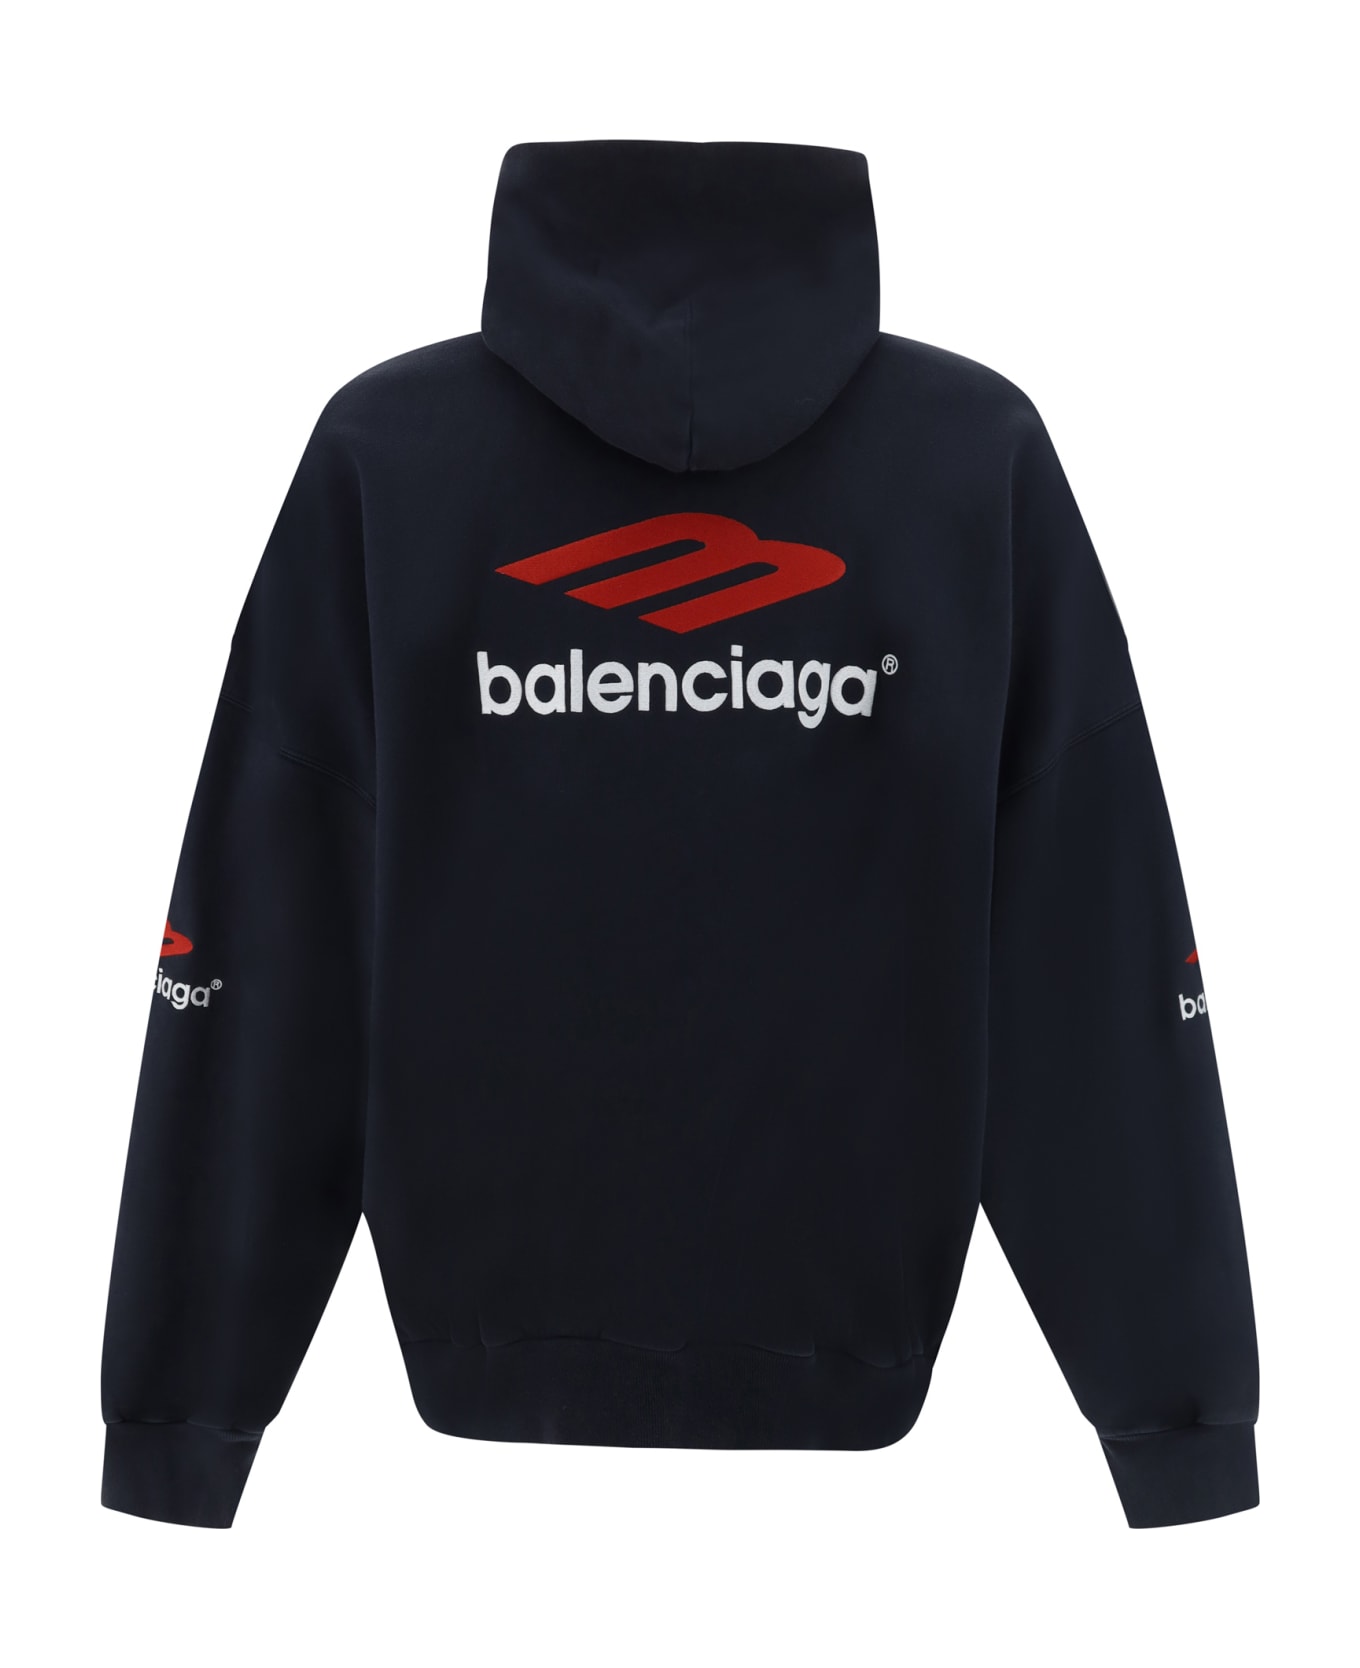 Balenciaga 3b Icon Embroidered Hoodie - Fade Black/red/white